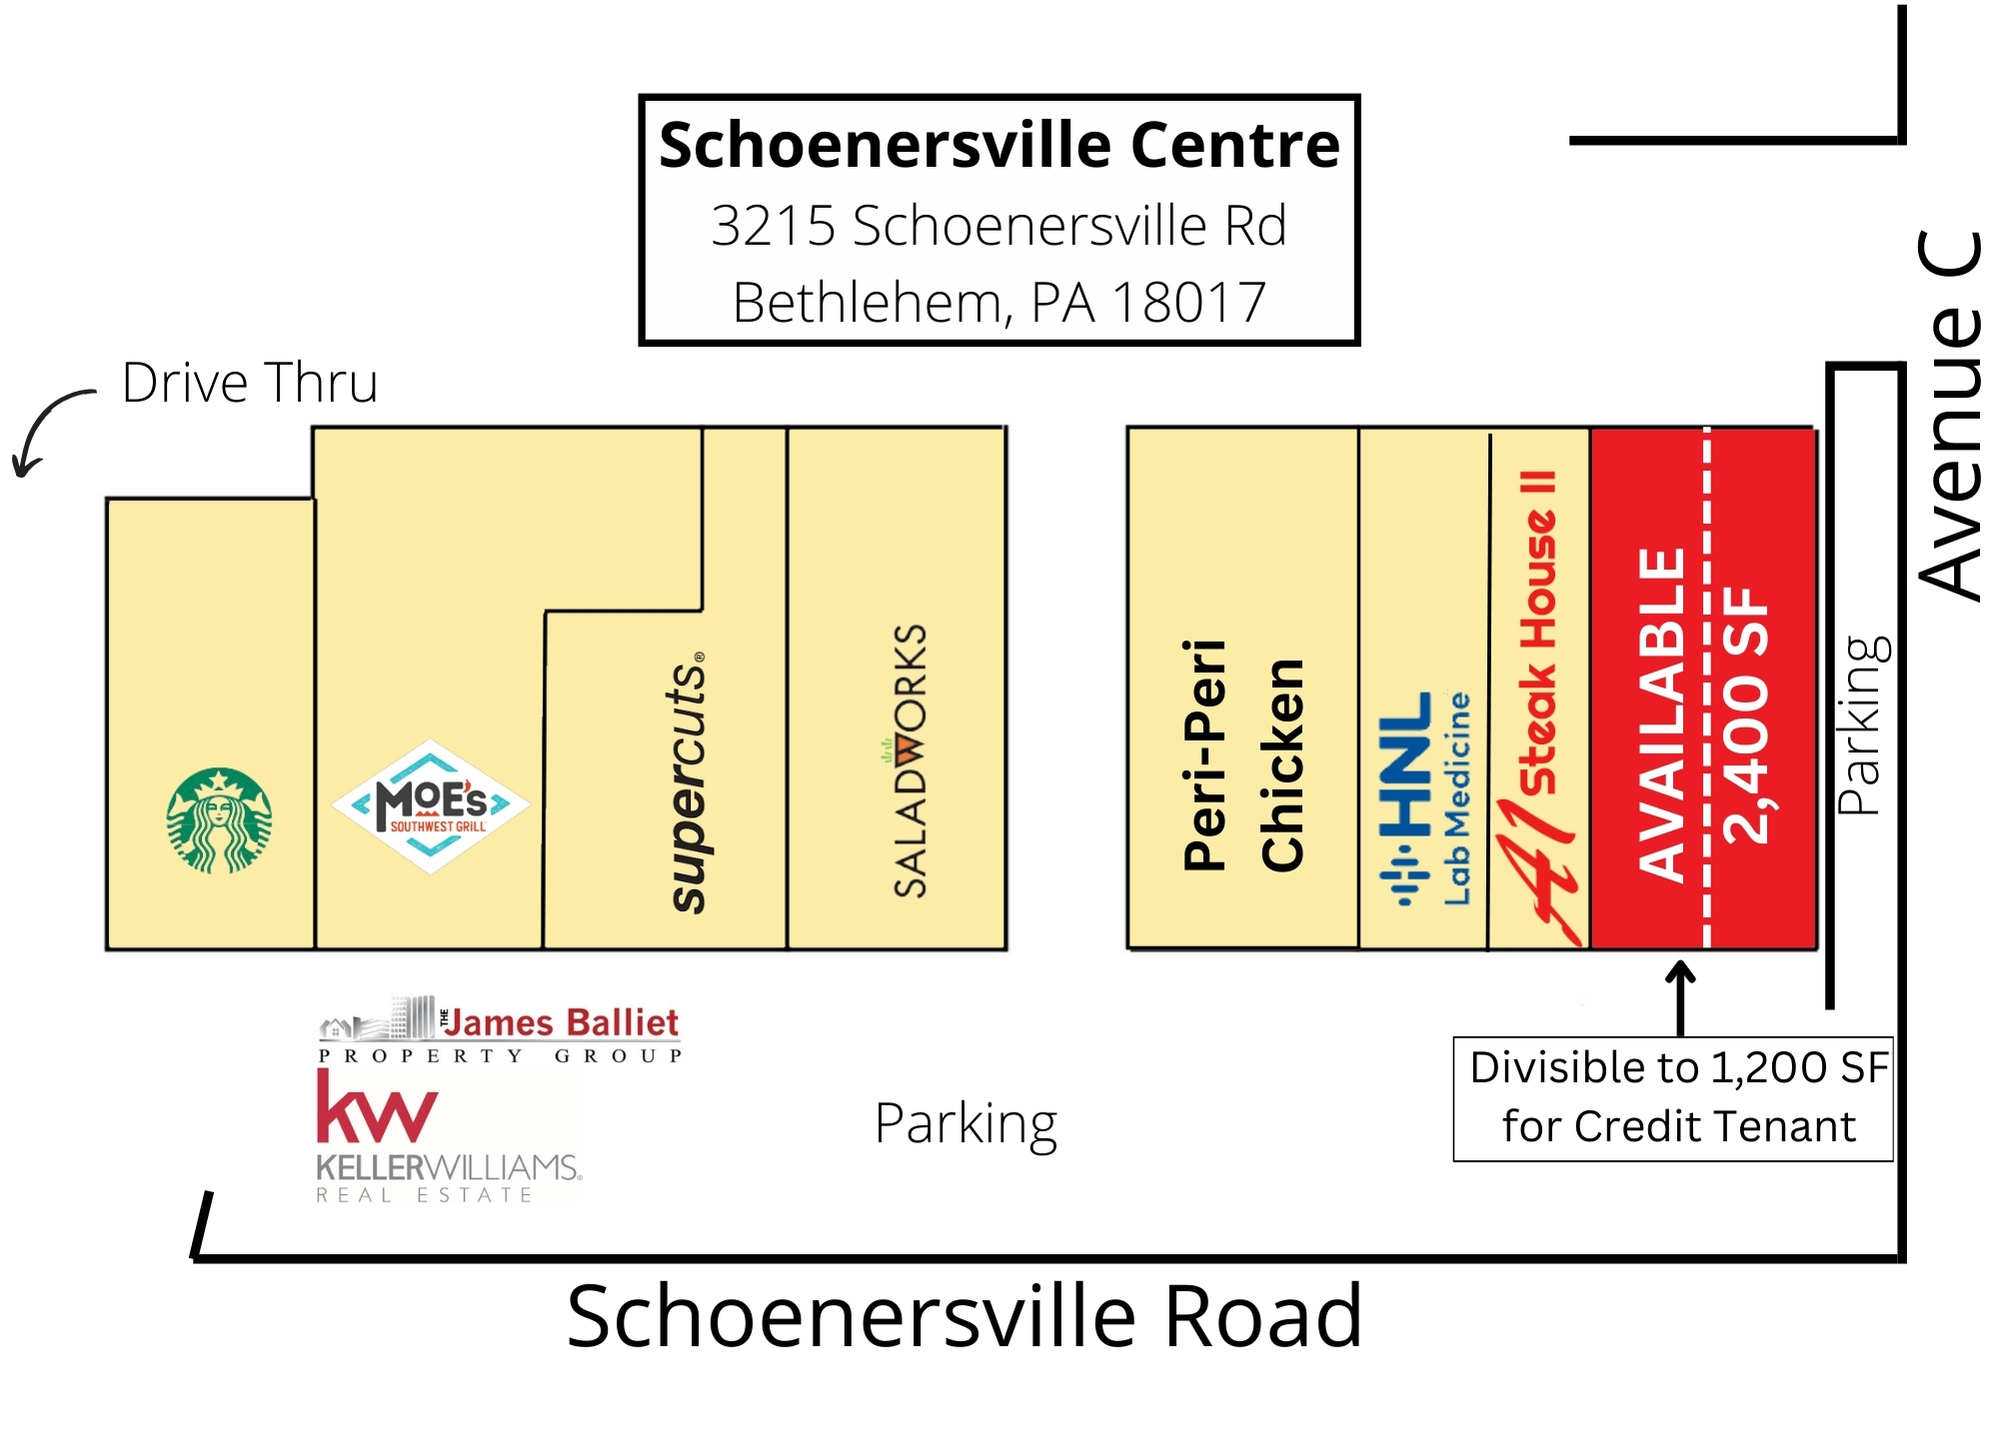 3215 Schoenersville Rd, Bethlehem, Pennsylvania 18017, ,Retail,For Lease,3215 Schoenersville Rd,1055